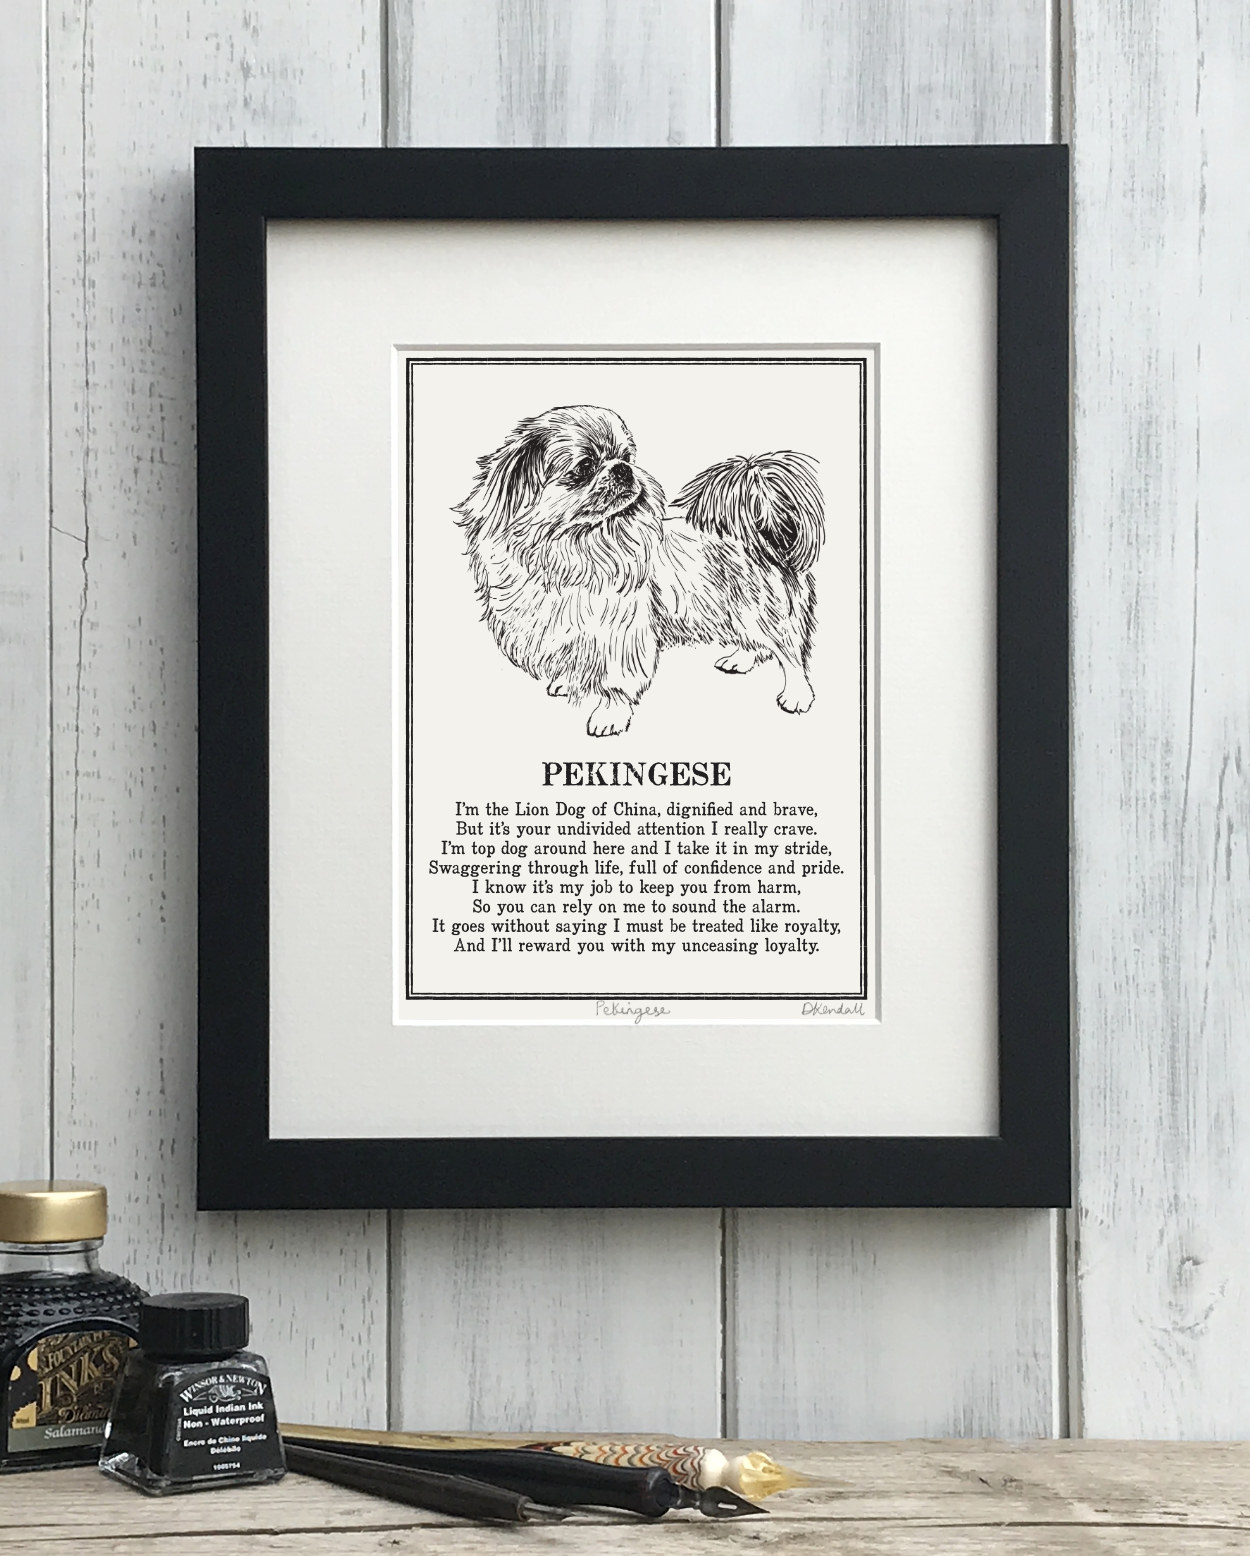 Pekingese Doggerel Illustrated Poem Art Print | The Enlightened Hound